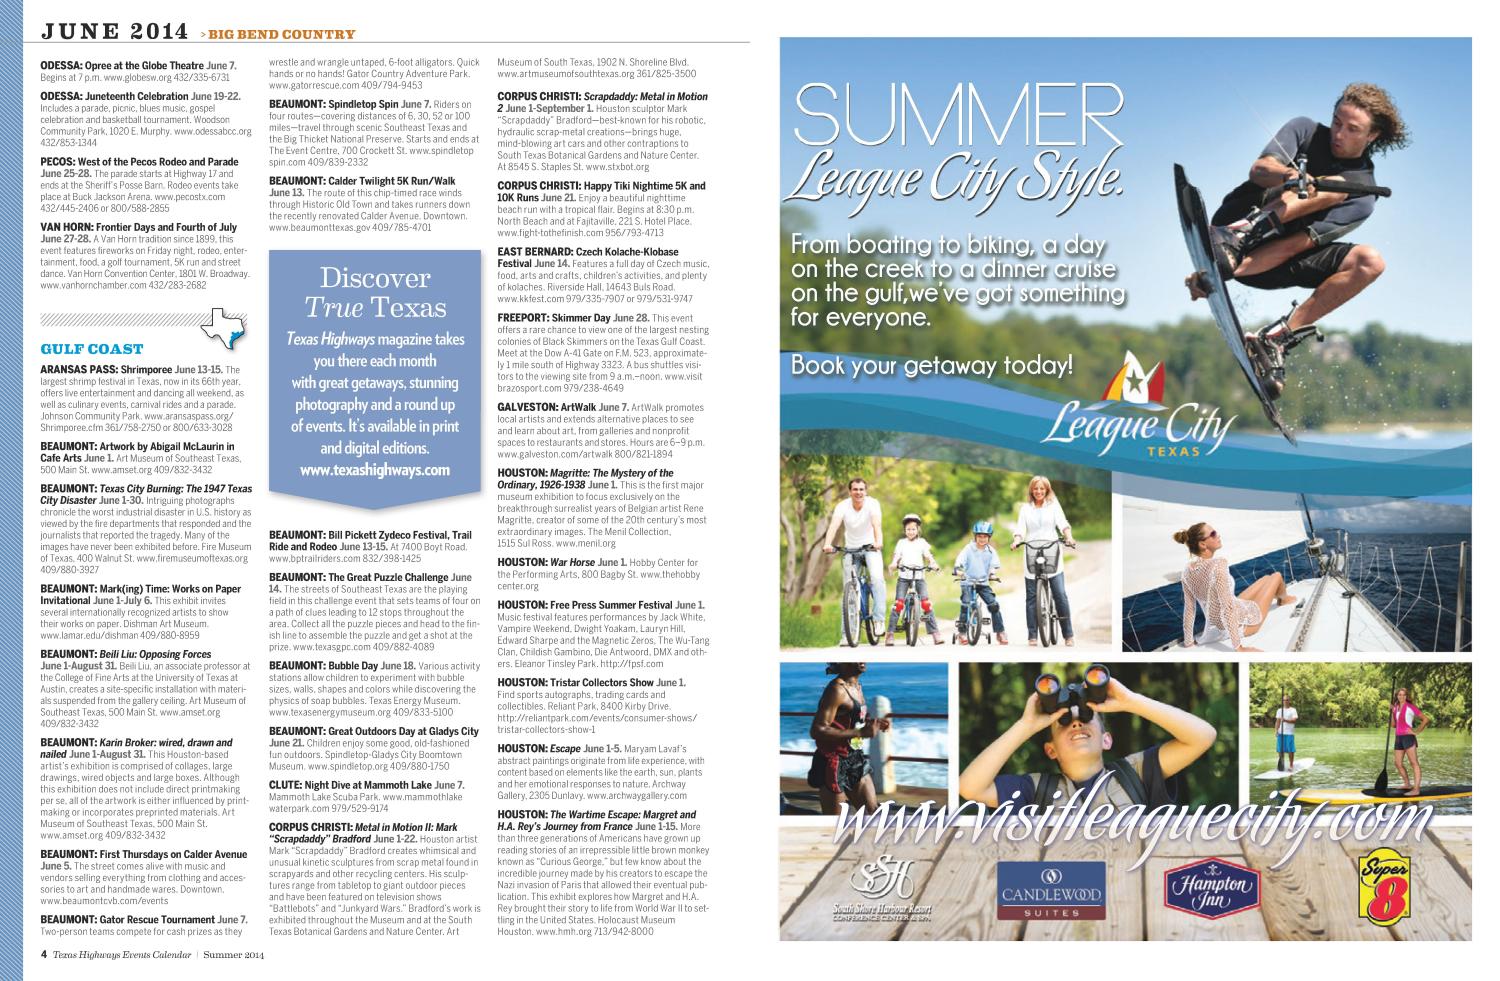 Texas Events Calendar, Summer 2014
                                                
                                                    4
                                                